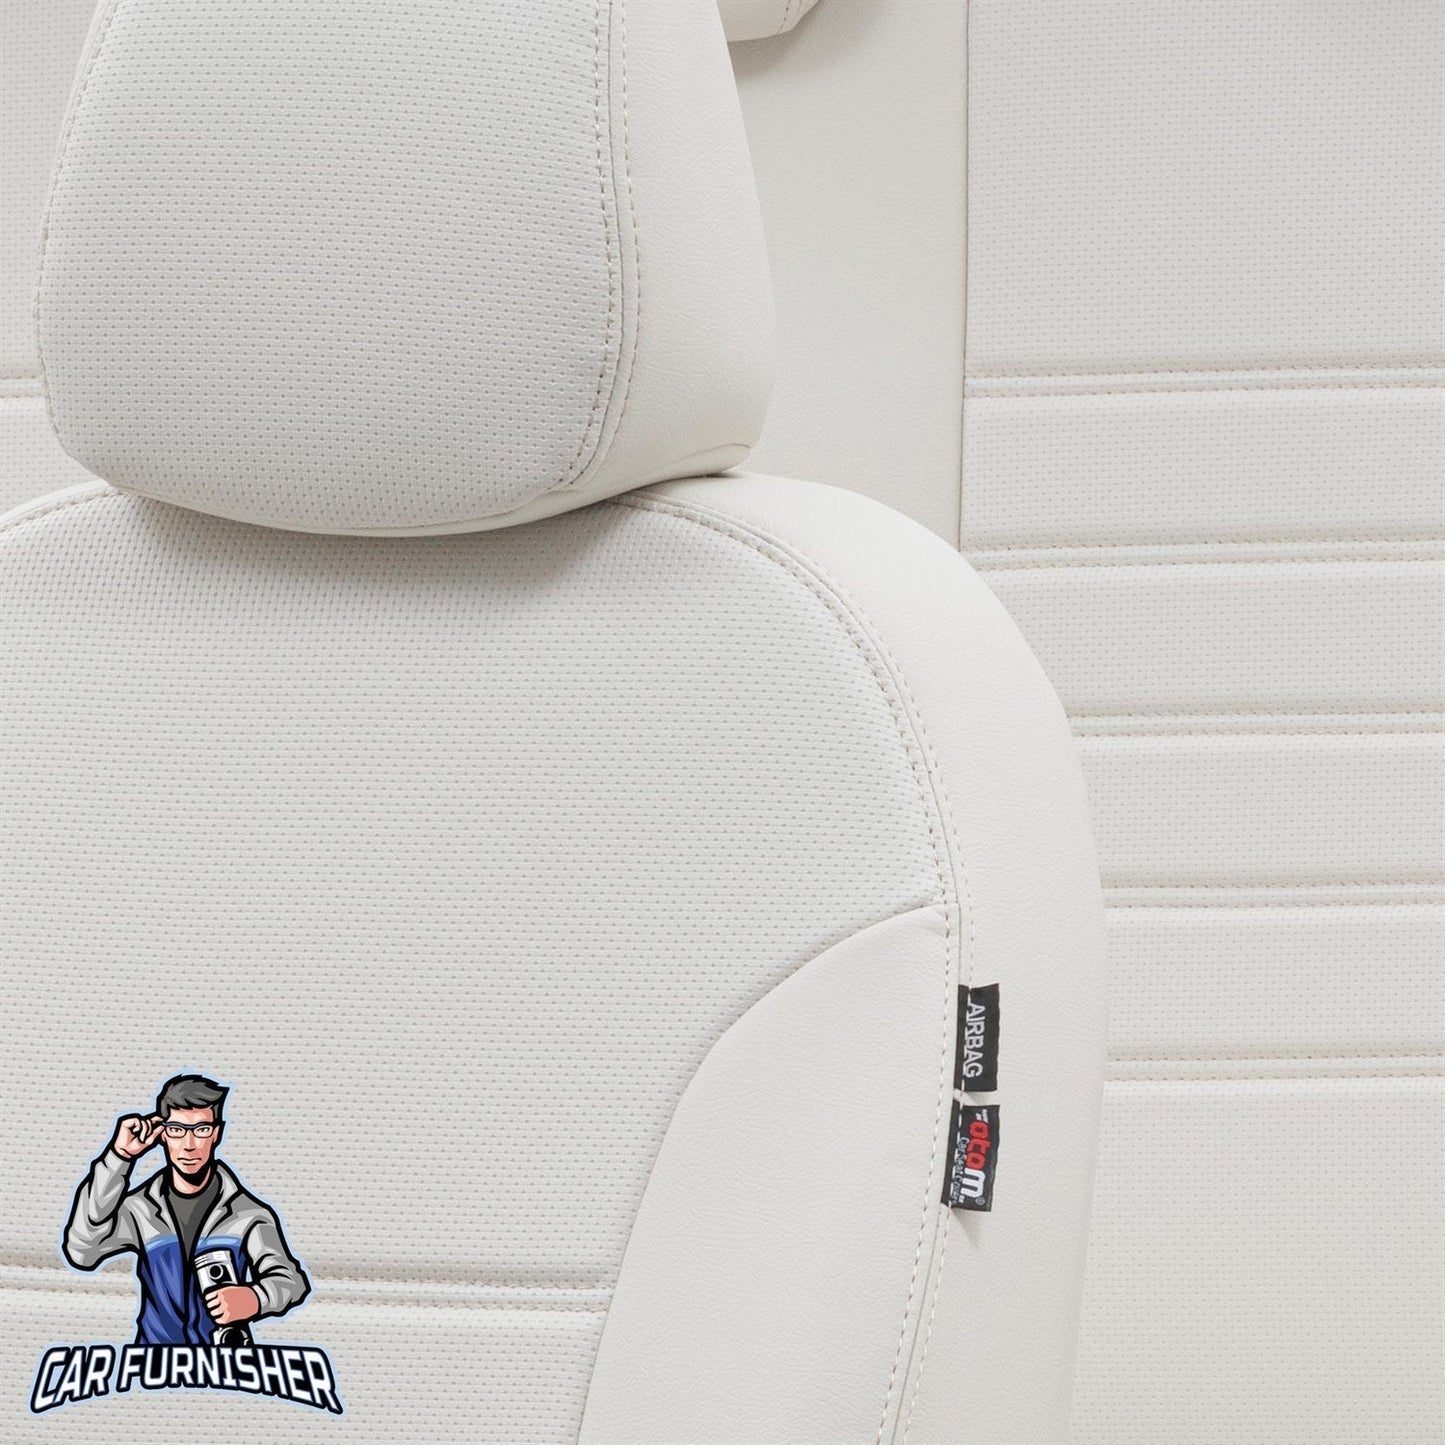 Hyundai Matrix Seat Covers New York Leather Design Ivory Leather